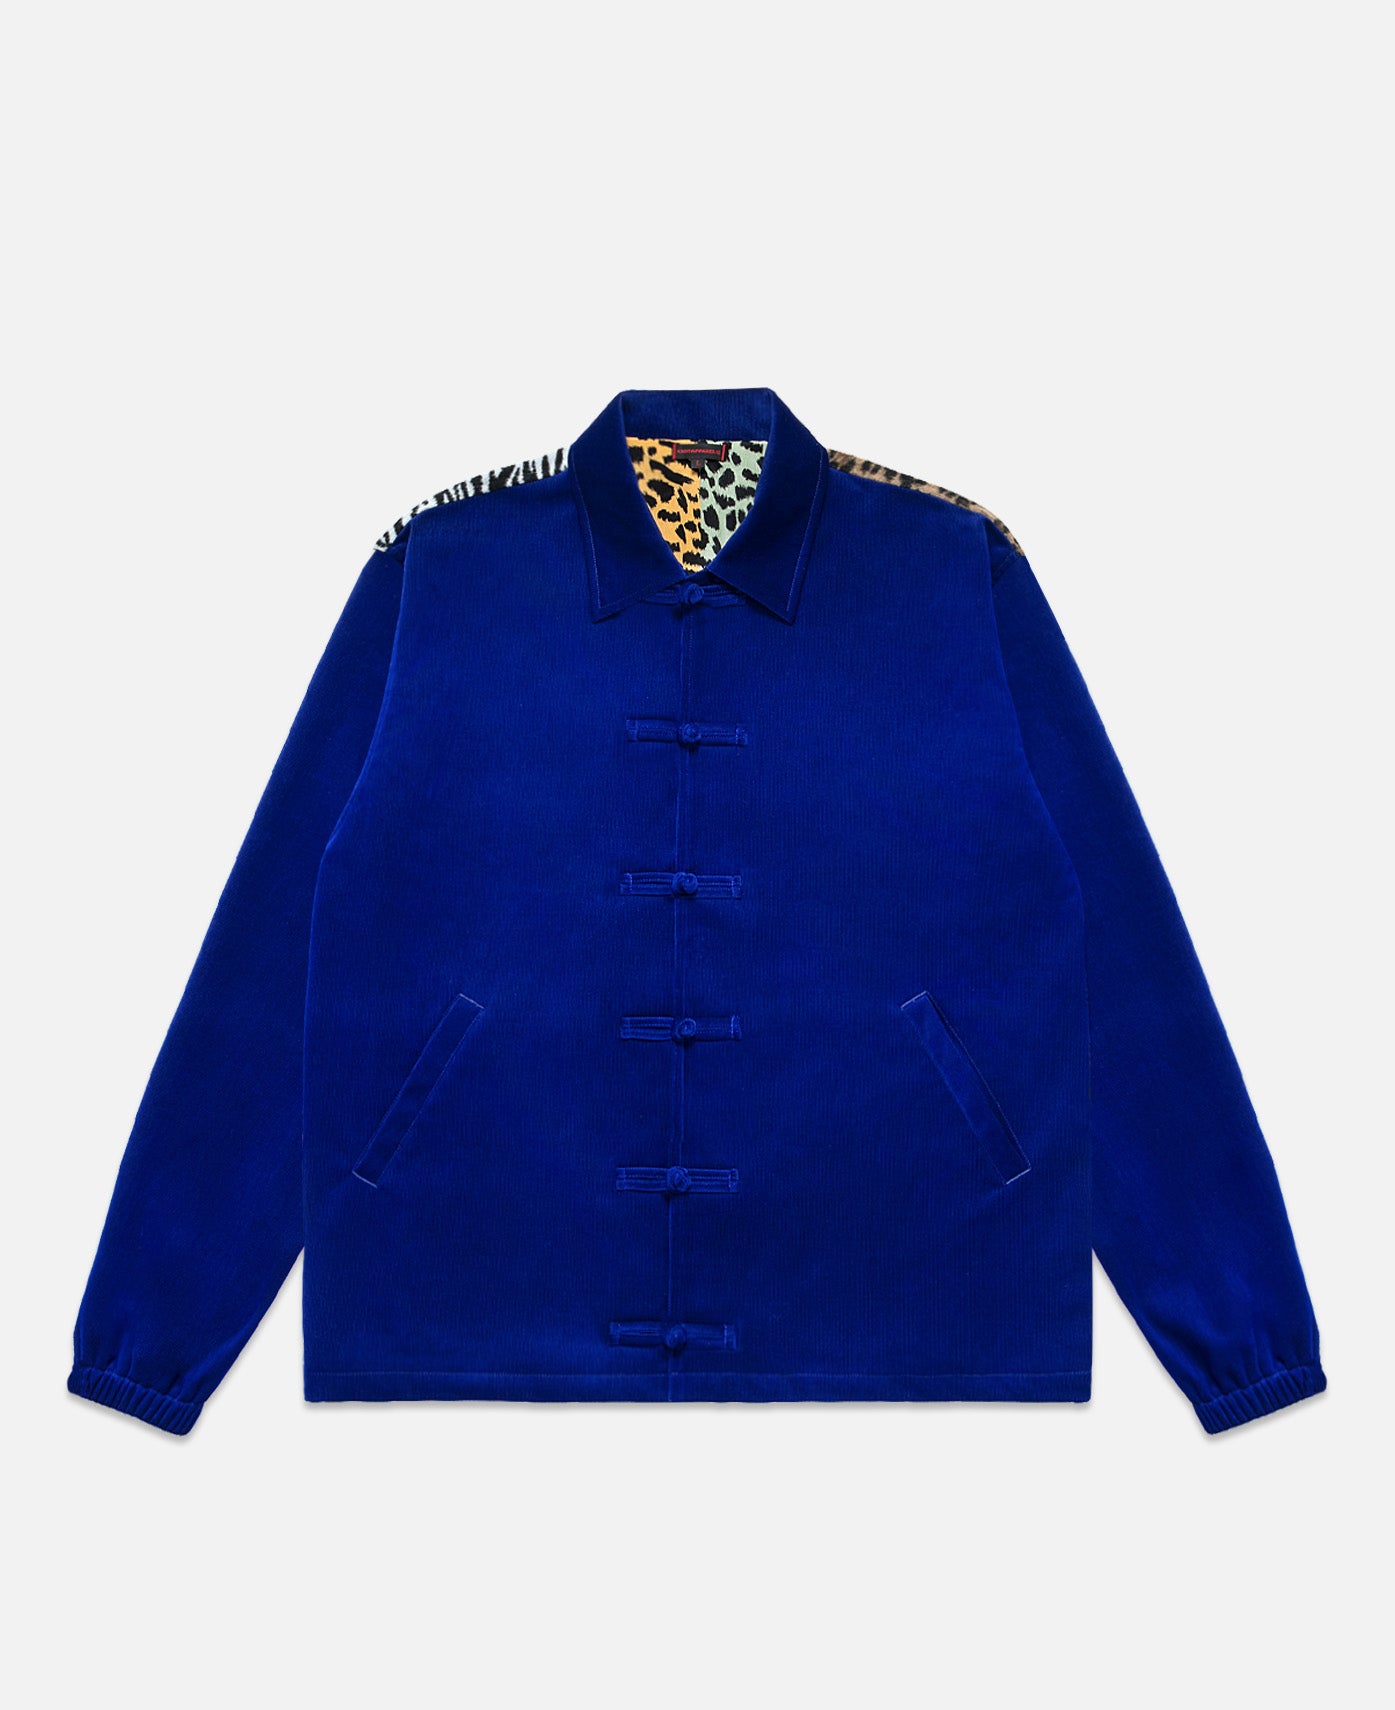 COACH Varsity Jacket in Blue for Men